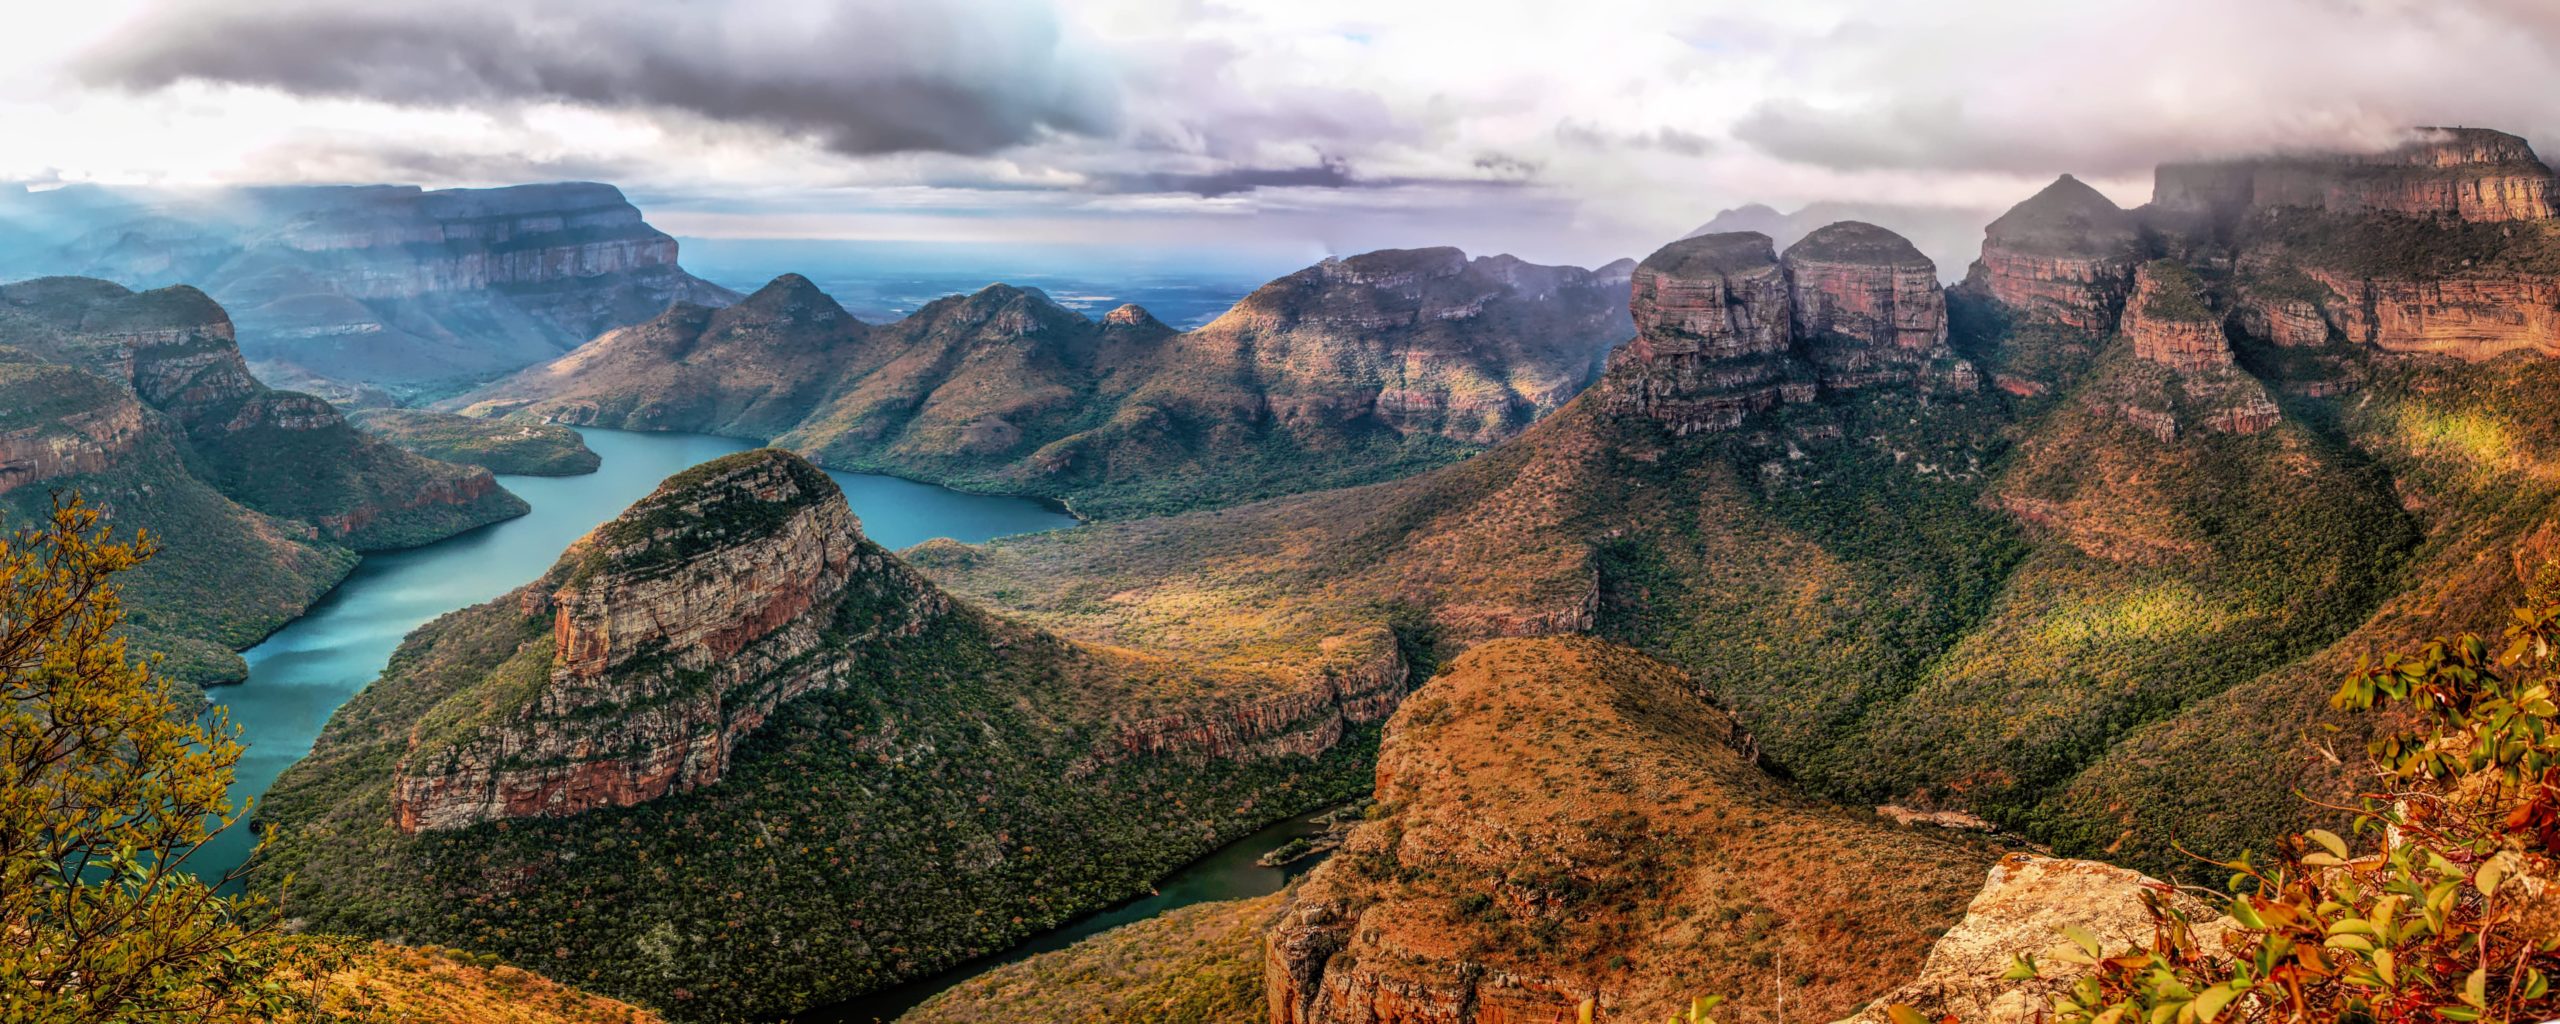 Mietwagen-Rundreise Südafrika: Highlights der Panorama-Route: Blyde River Canyon